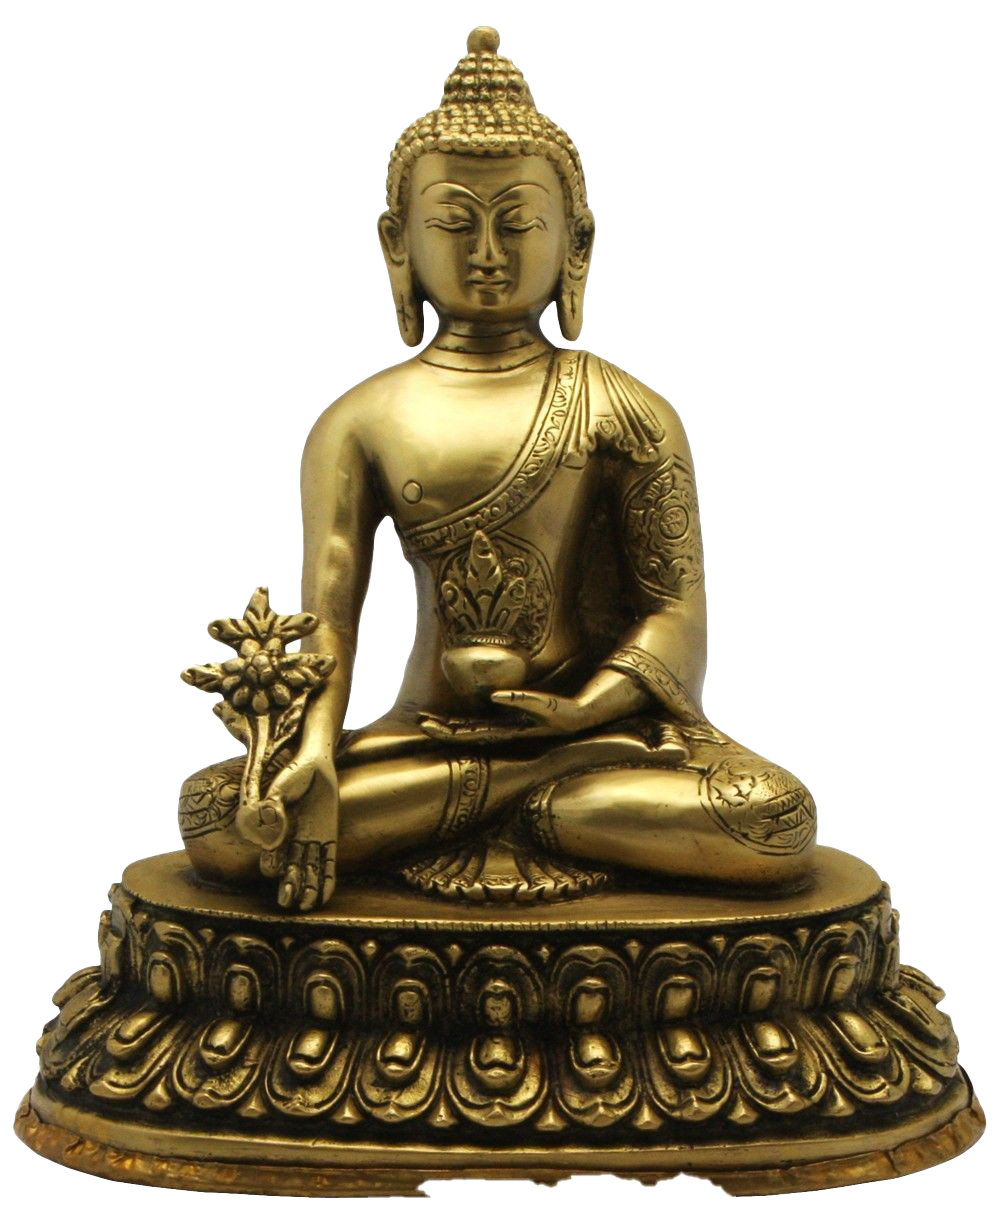 Buddha Statue PNG Background Image